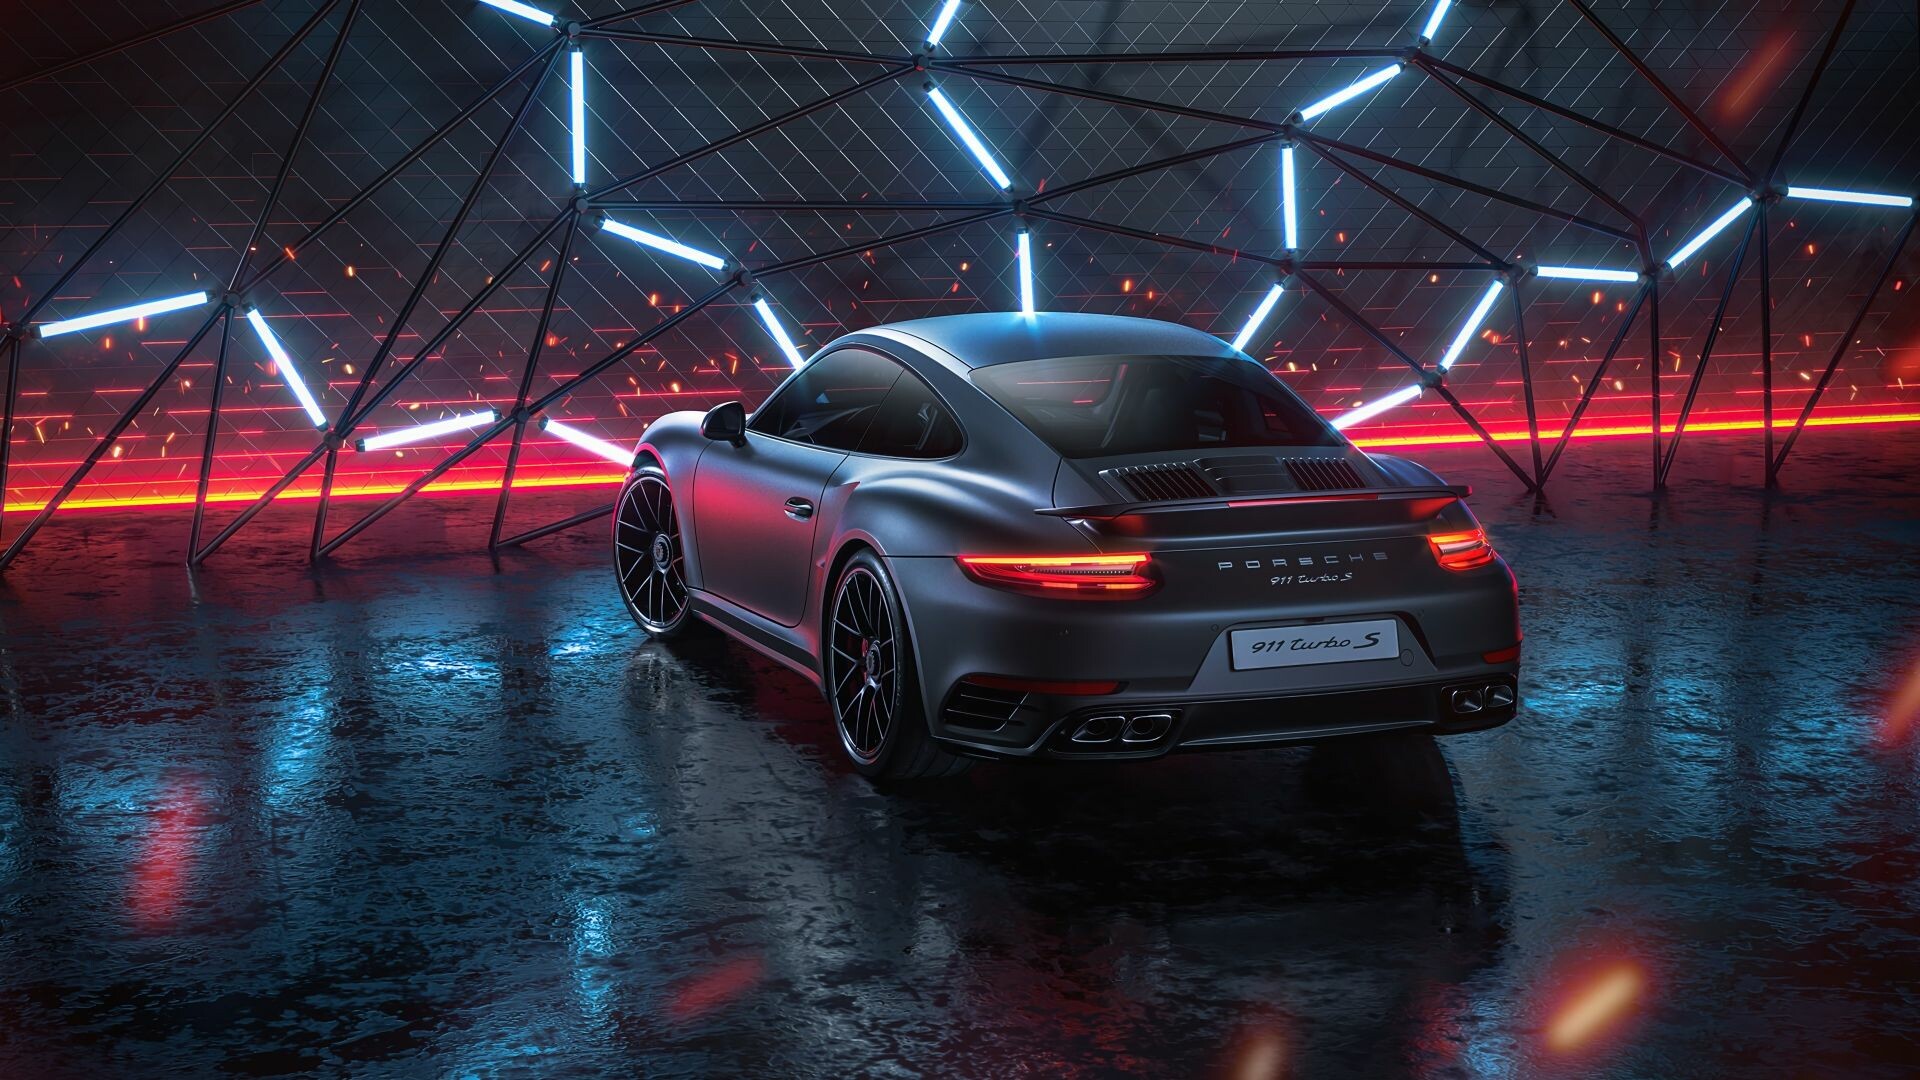 Porsche: 911 Turbo S, Automotive lighting. 1920x1080 Full HD Background.